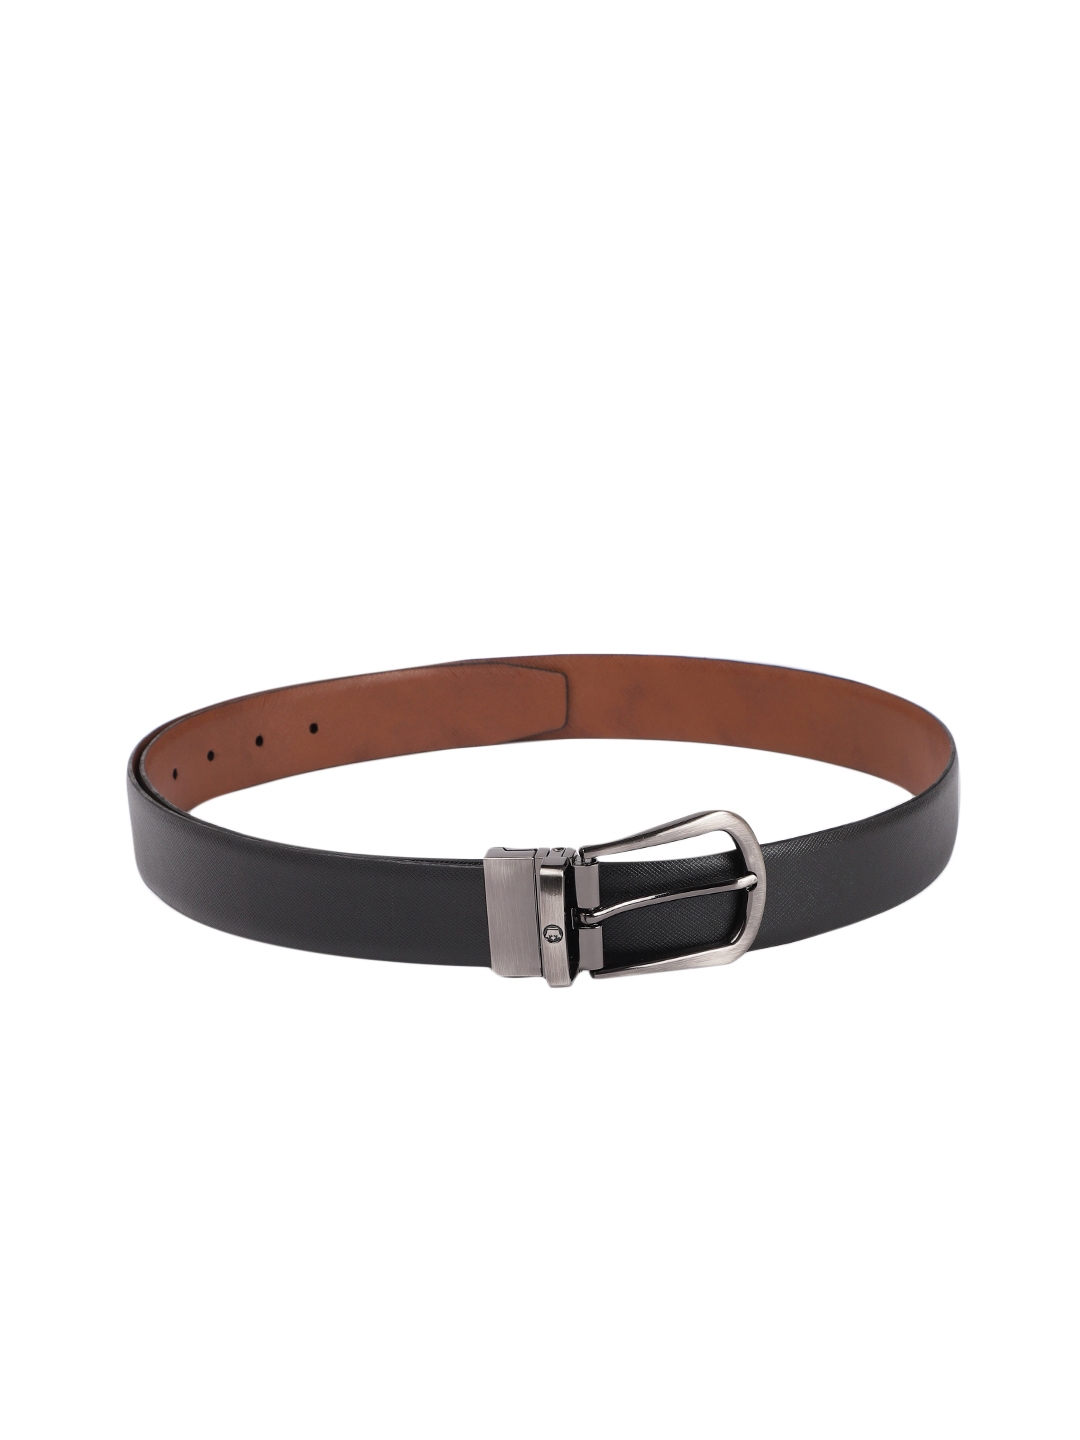 Buy Louis Philippe Black & Brown Leather Reversible Belt for Men